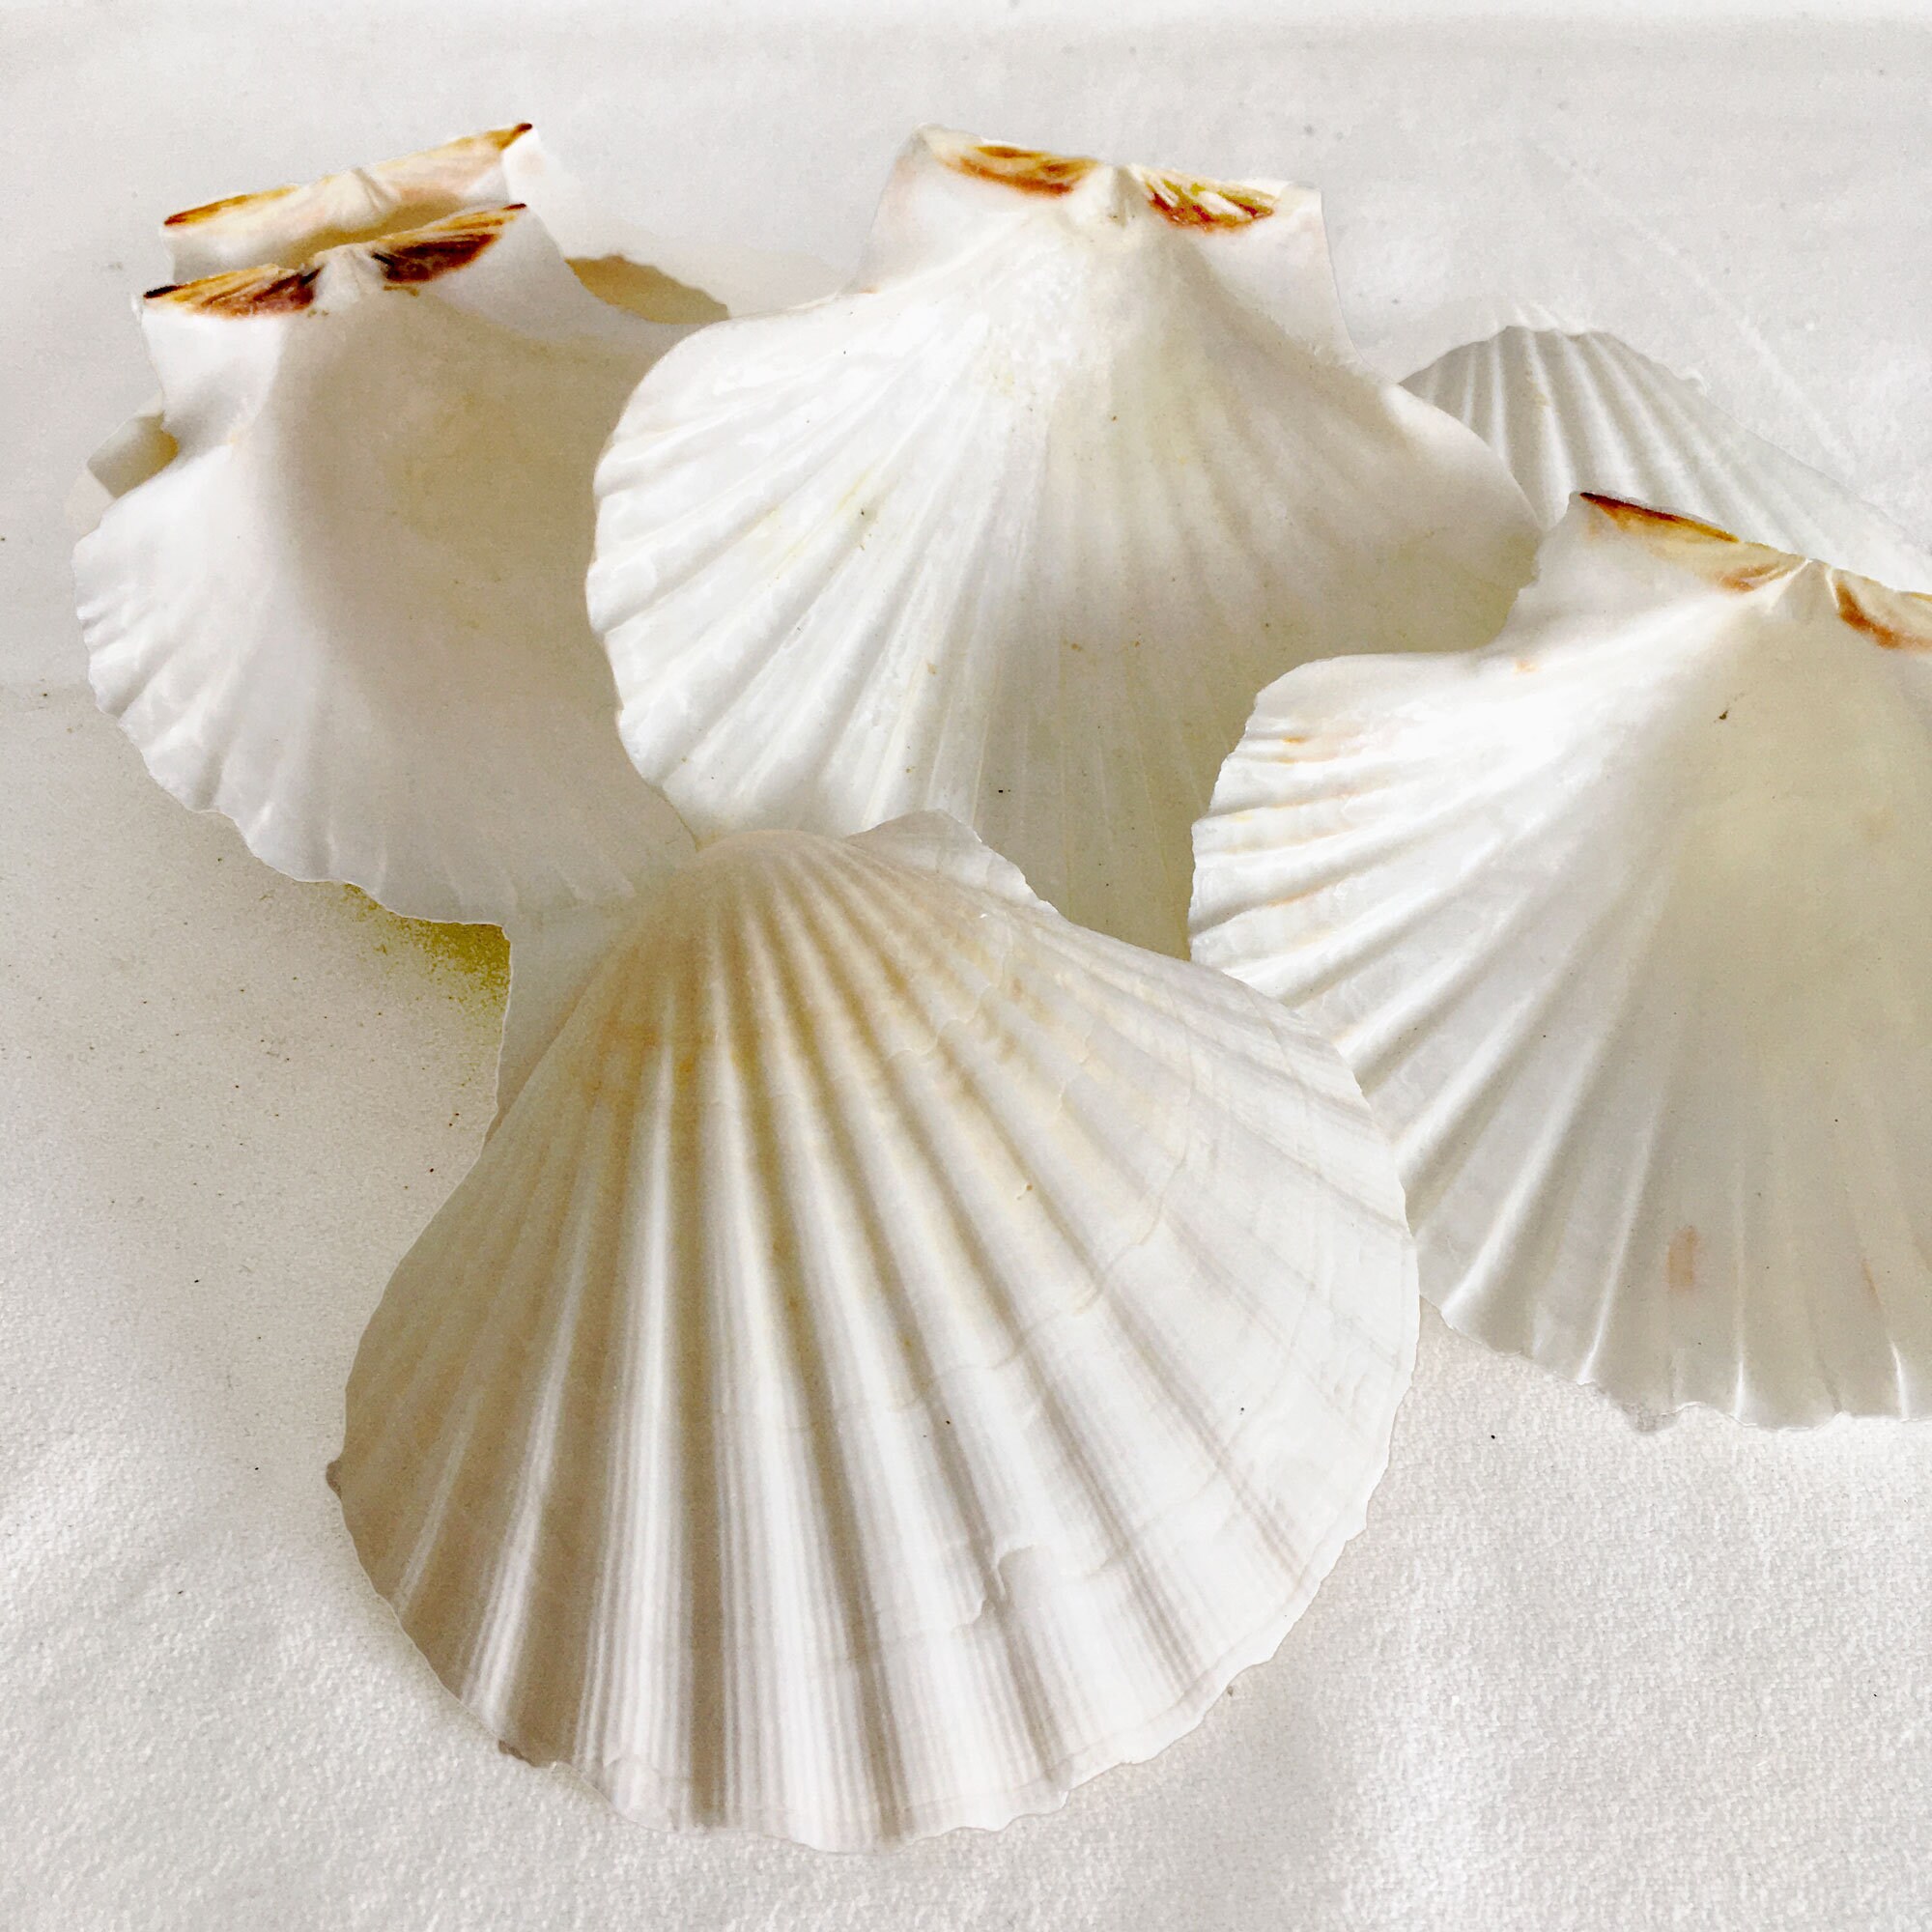 20 Scallop Shells, Craft Shells, Decoupage Shells, Painting, Shells, Craft  Shell Supplies, Shells for Crafts, Bulk Shells, Shell Crafts 